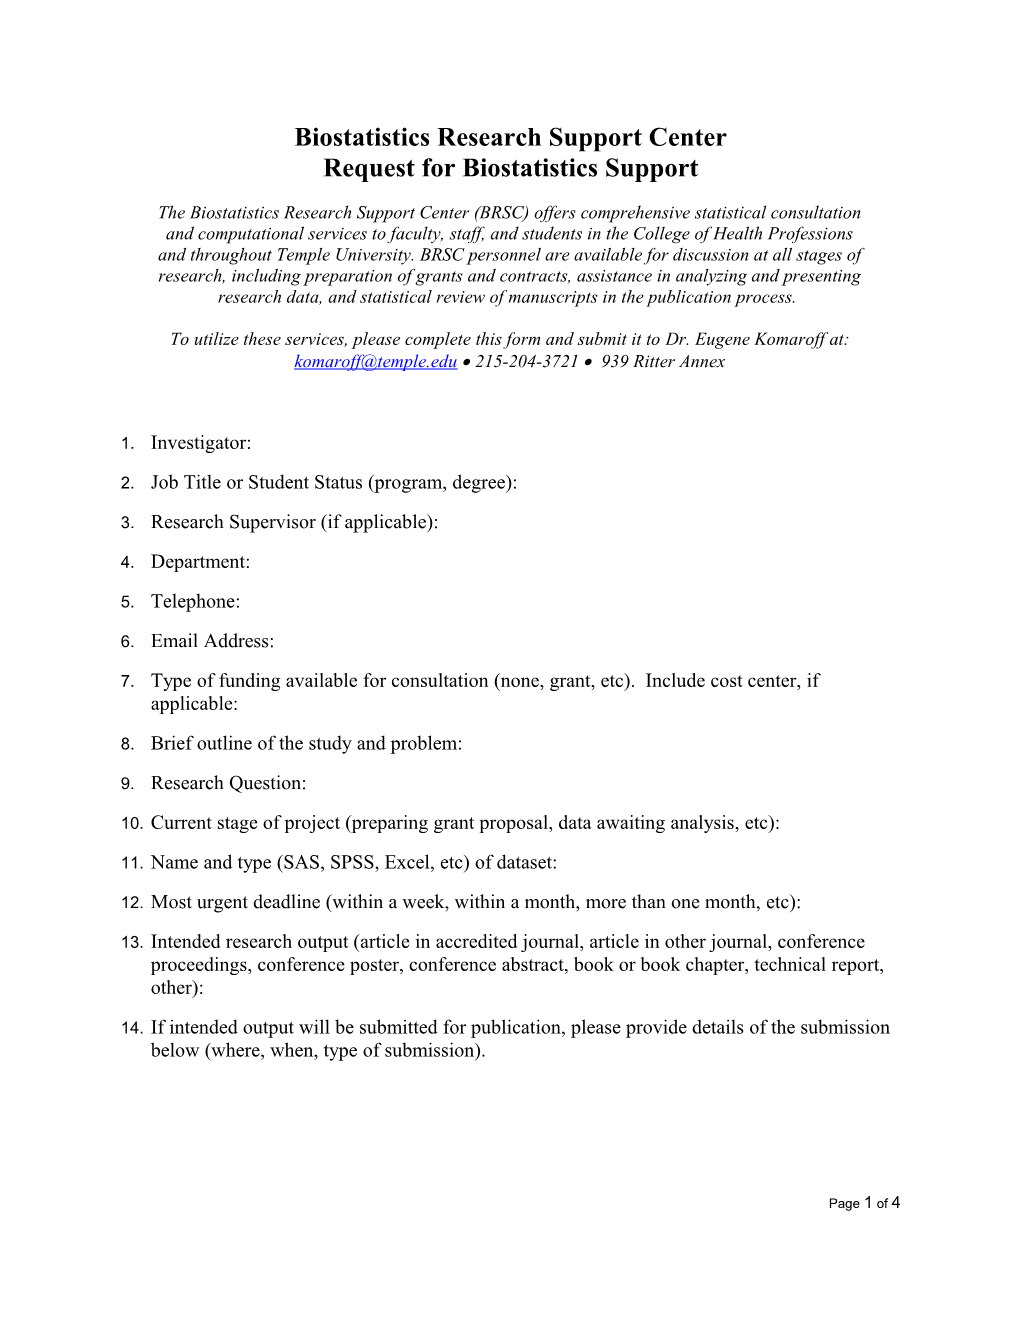 Request for Biostatistics Support